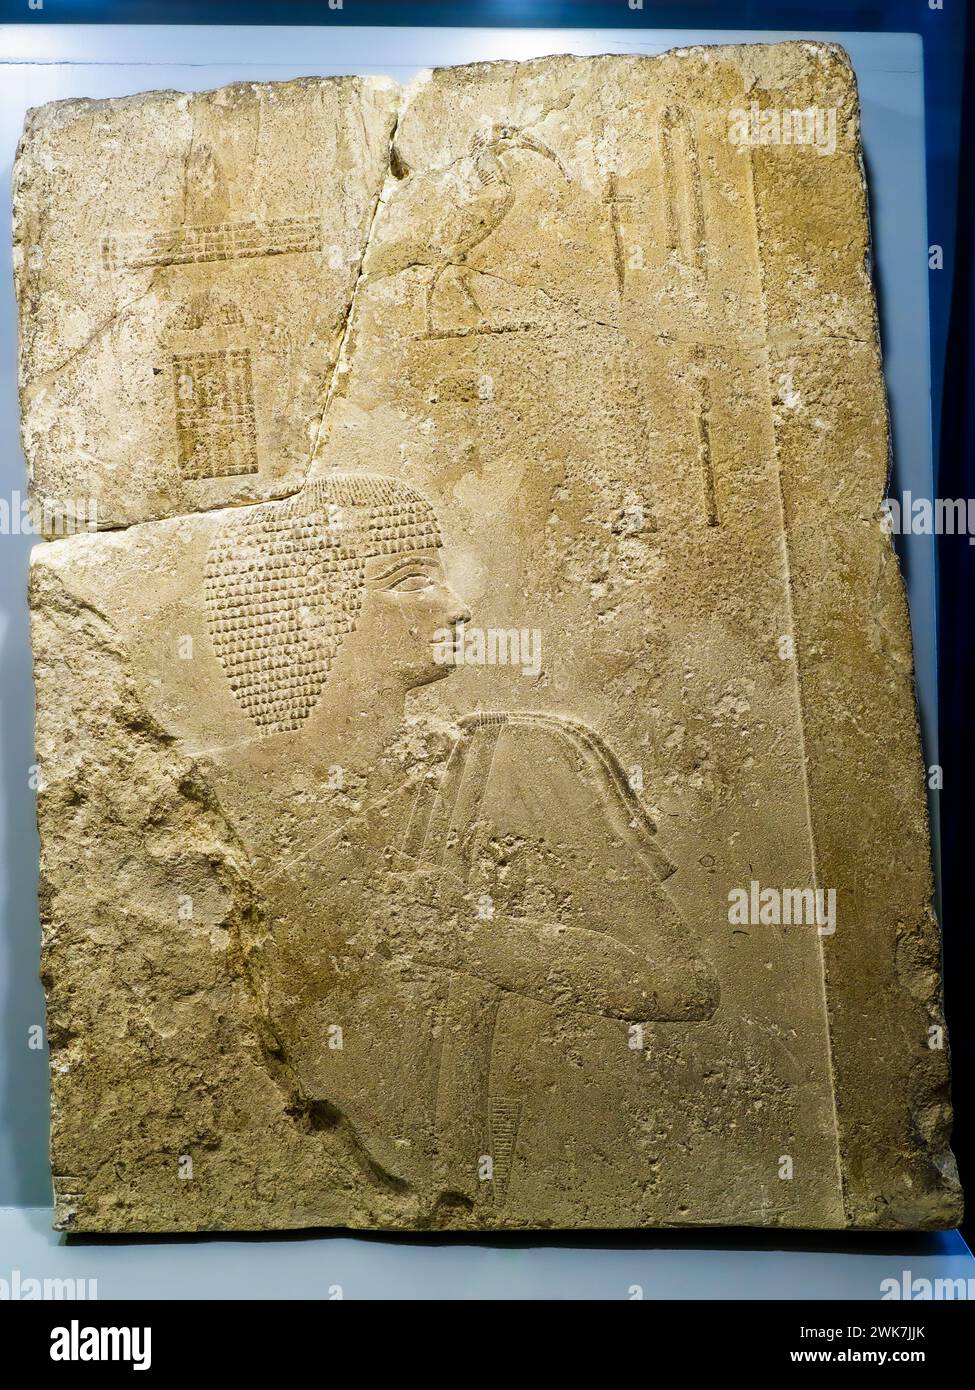 Relief mural du tombeau d'Akhethotep - ancien Royaume, dynastie IV (2640 - 2520 av. J.-C.) - calcaire - de basse Égypte, Gizeh - Museo di Scultura Antica Giovanni Barracco, Rome, Italie Banque D'Images